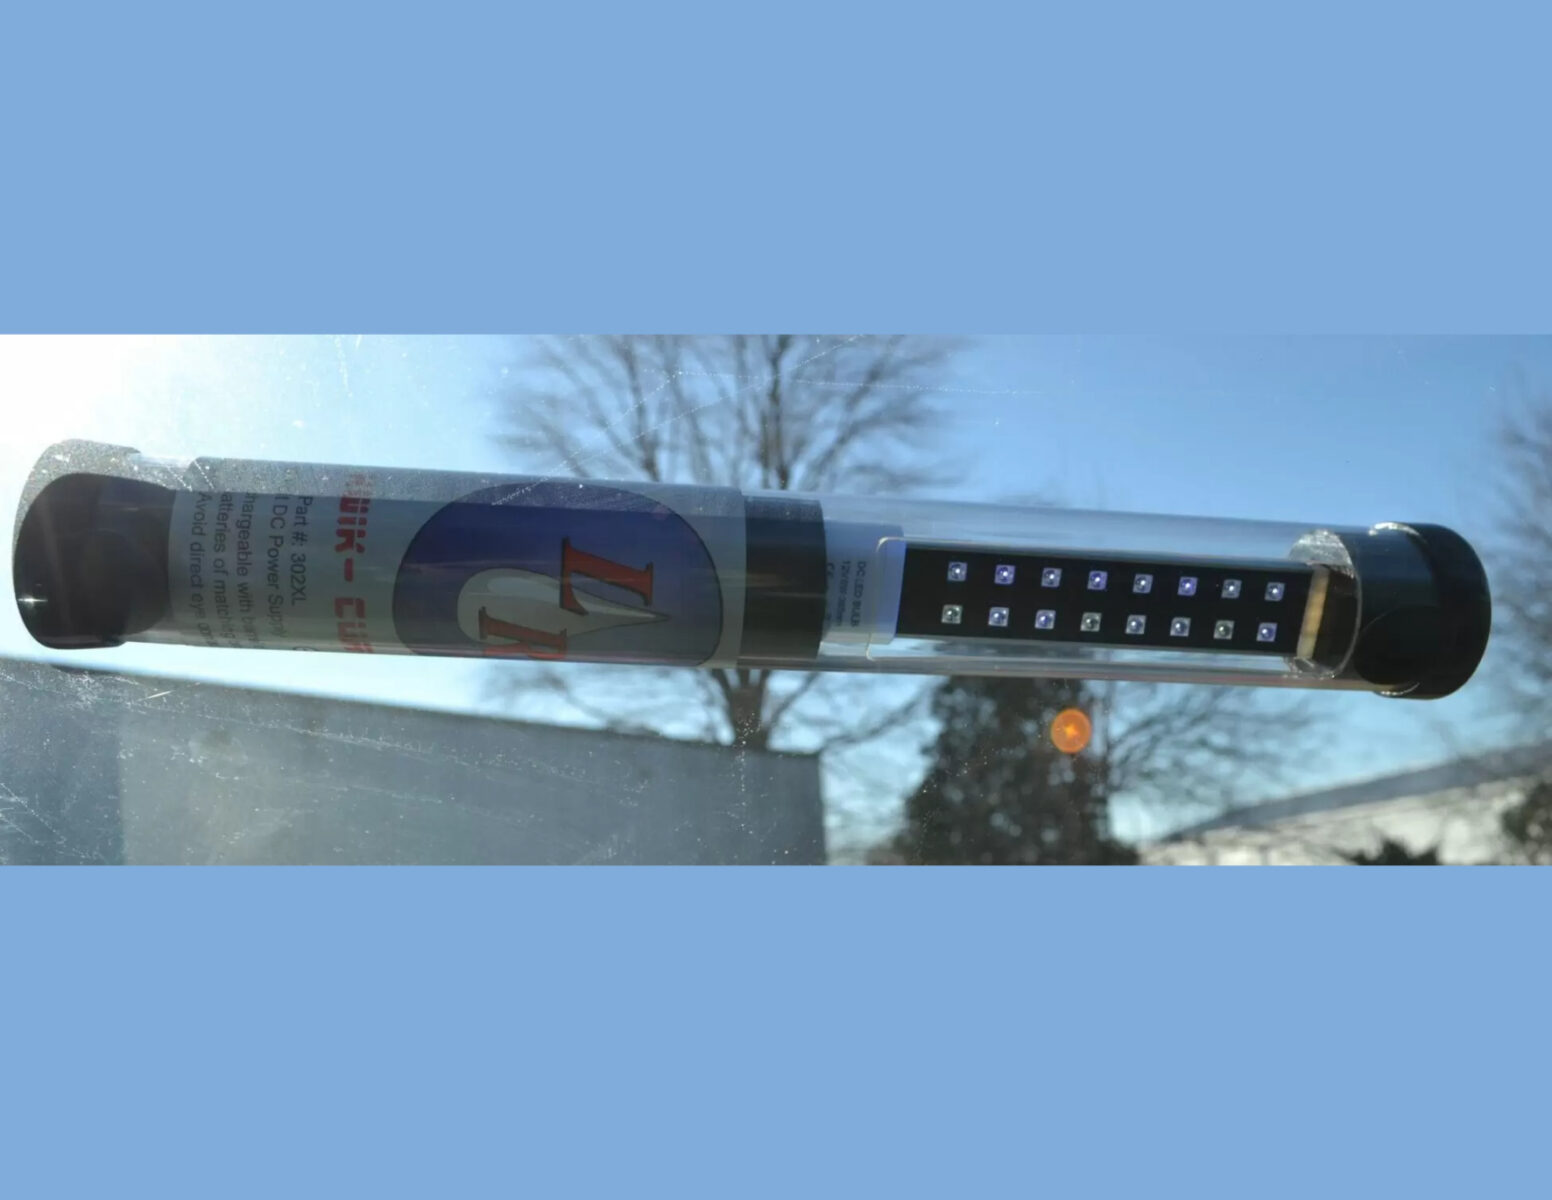 UV Cure Lamp UV Light Resin Lamp for Car Window Glass Windshield